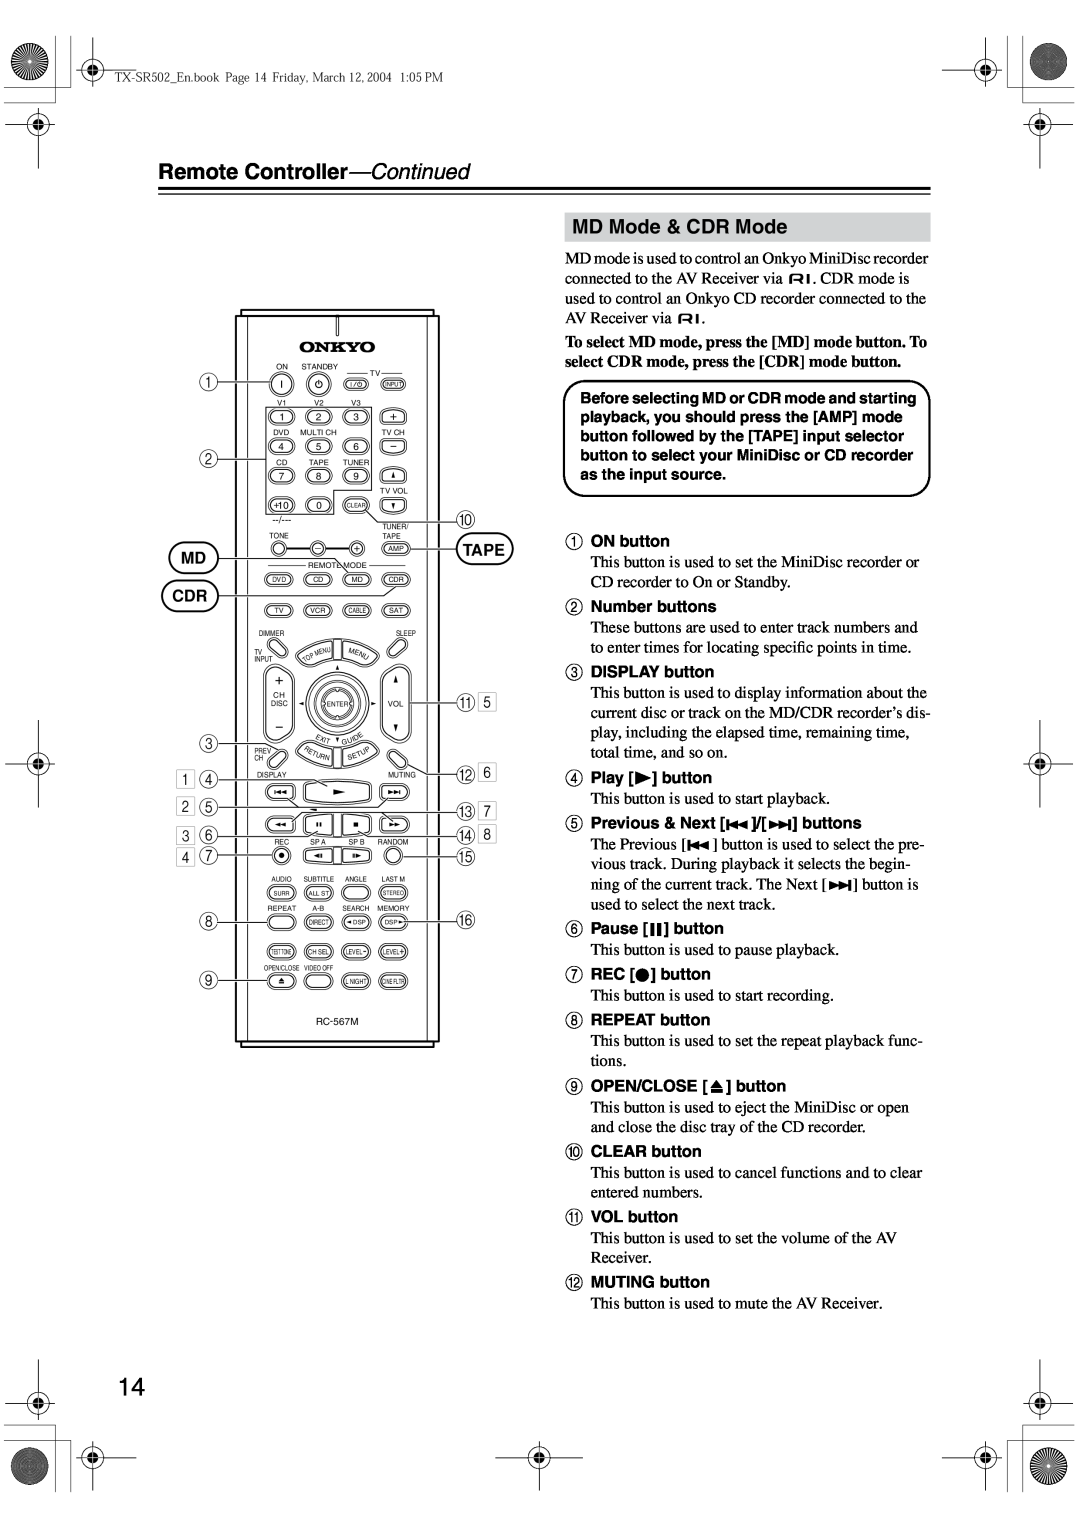 Onkyo TX-SR8250, TX-SR502E instruction manual MD Mode & CDR Mode, Remote Controller—Continued 